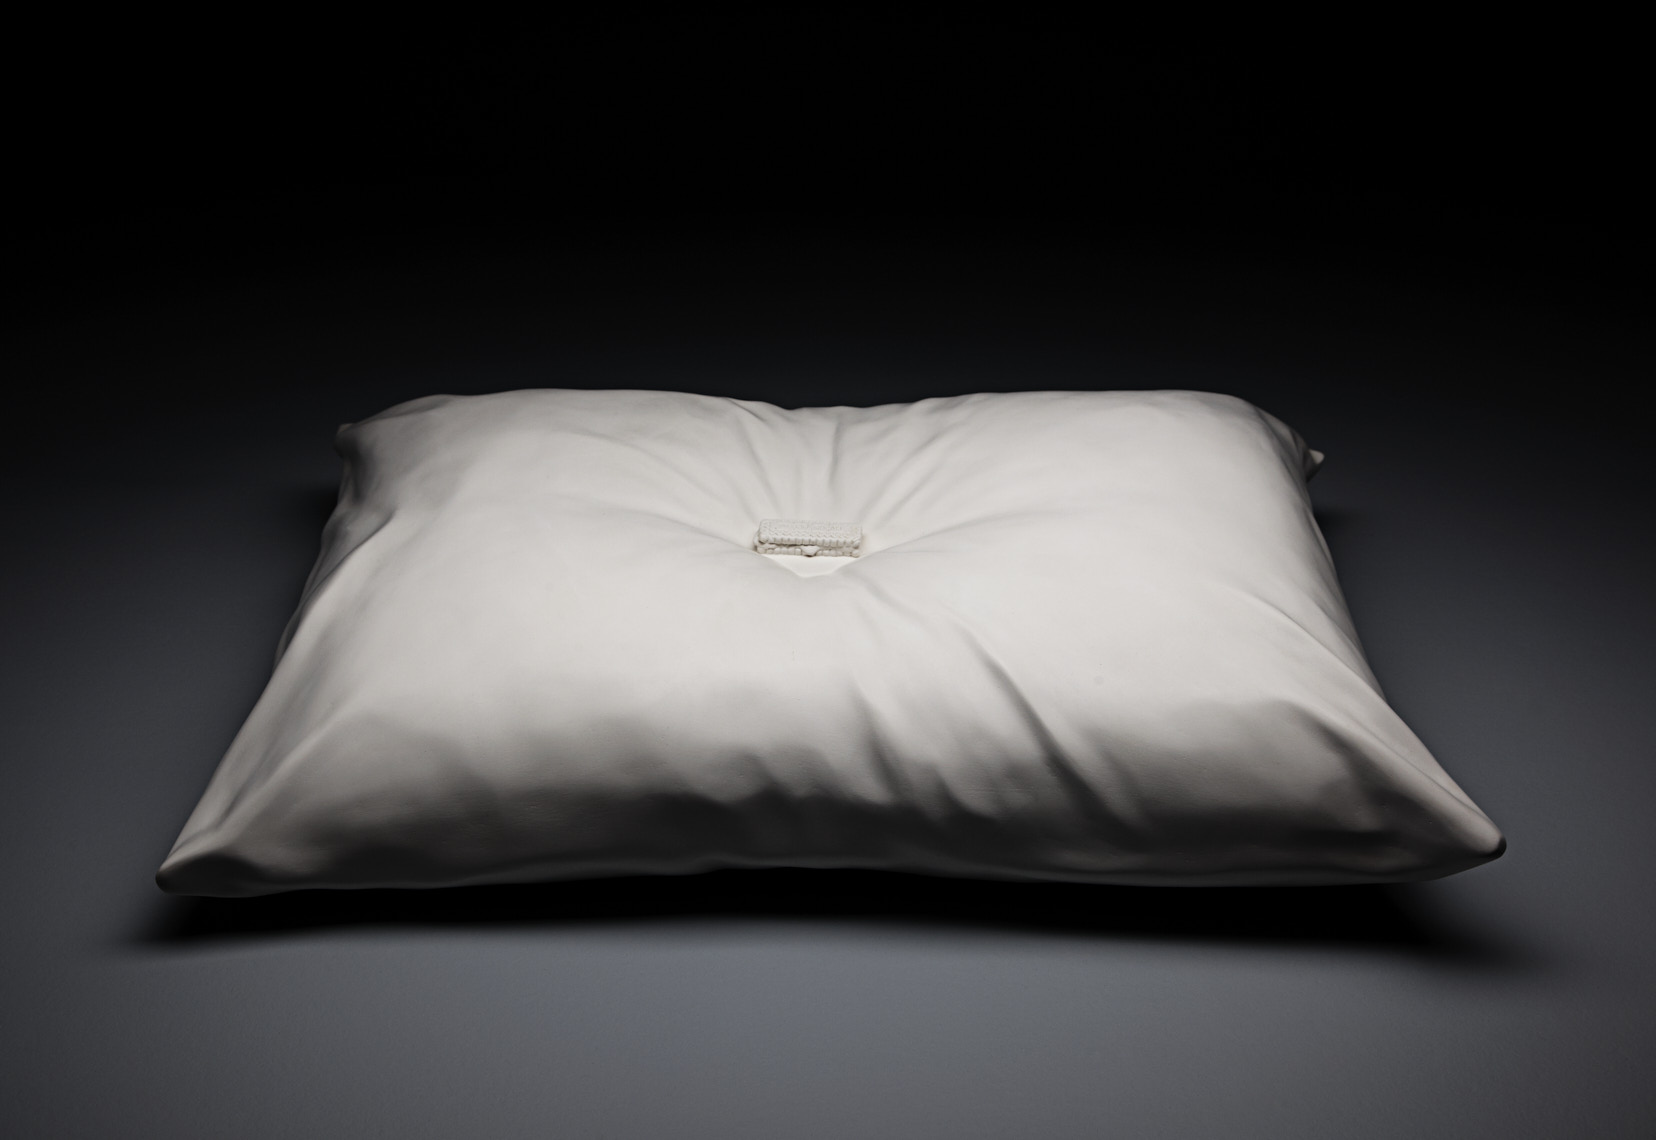 Gallery-Toronto-Artist-WendyCoburn-sculpture-pillow-JKimber-Photographer